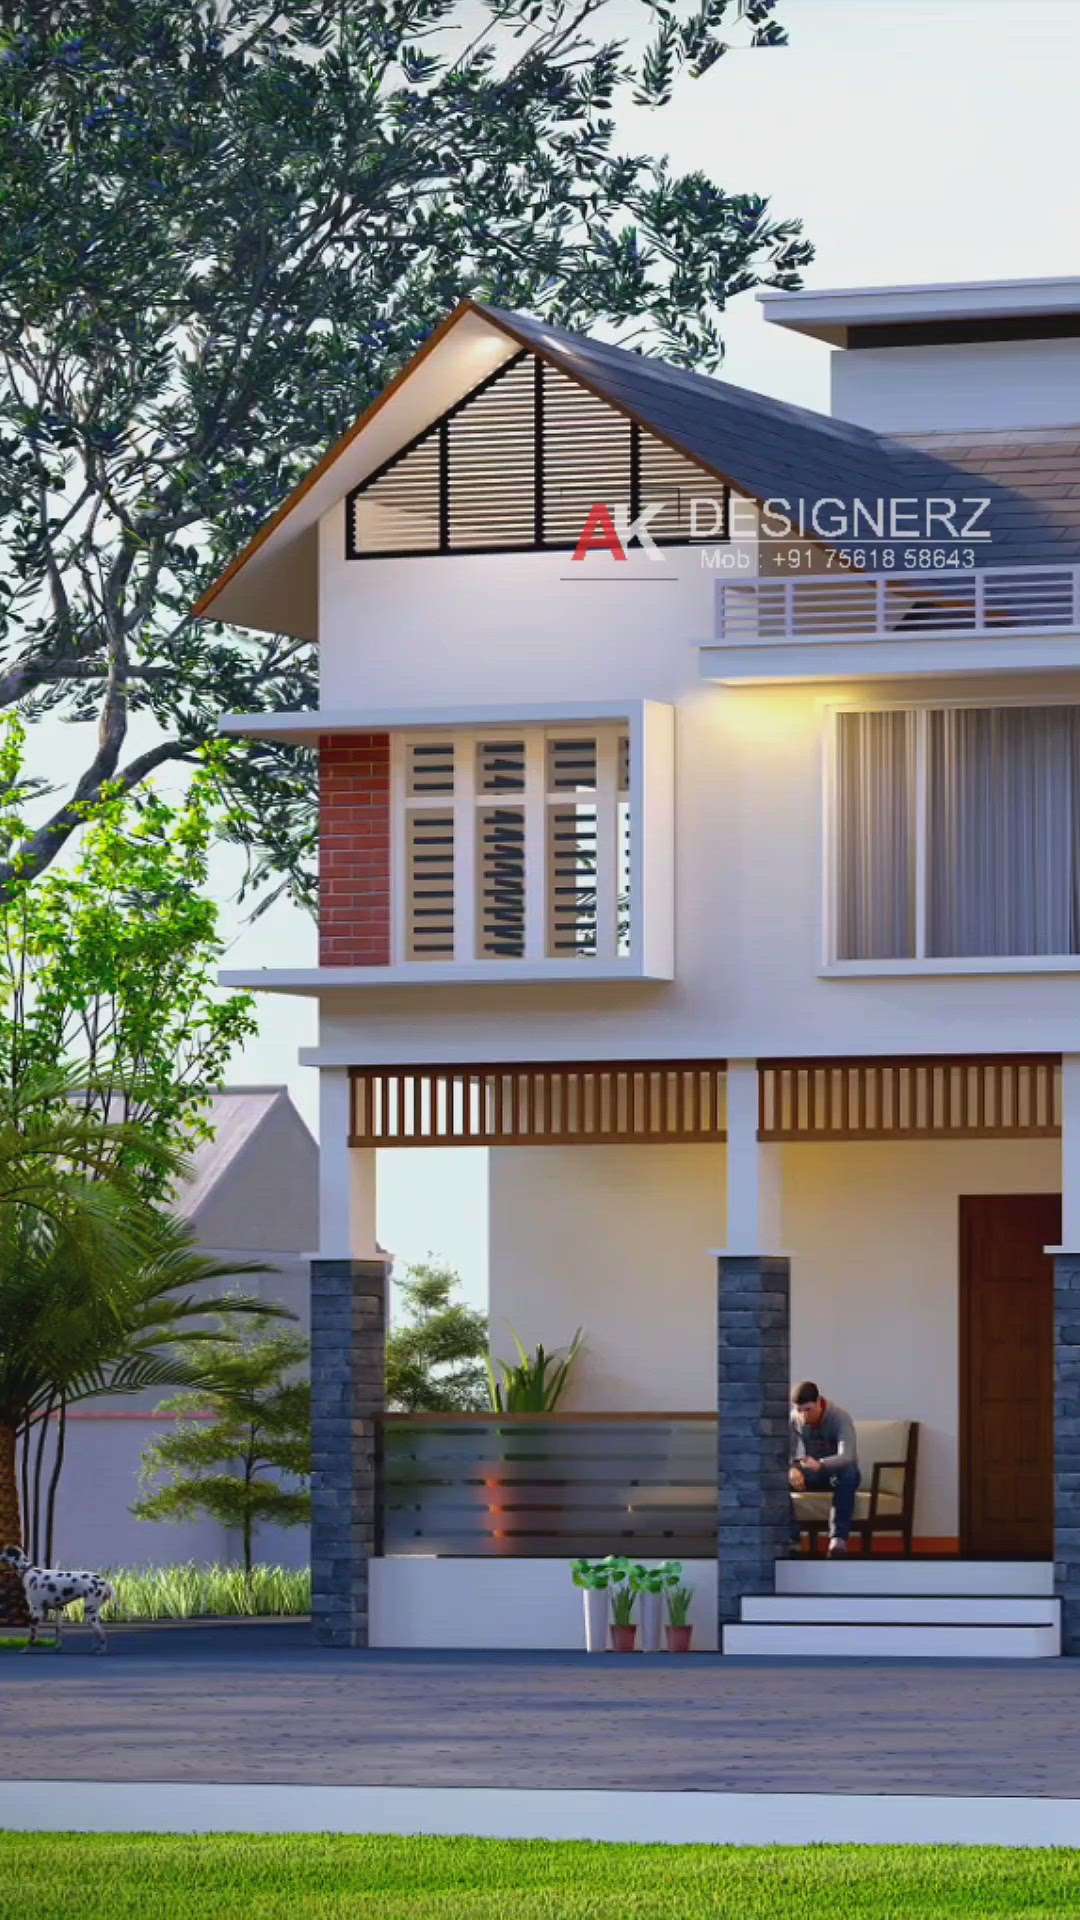 sq : 2390
Exterior design
3D 2side View...ഏറ്റവും കുറഞ്ഞ നിരക്കിൽ സ്വന്തമാക്കൂ 
cont:. 7561858643
 #ElevationHome  #HouseDesigns  #HomeDecor  #exterior_Work  #3d  #exteriordesigns  #InteriorDesigne  #HomeAutomation  #architecturedesigns